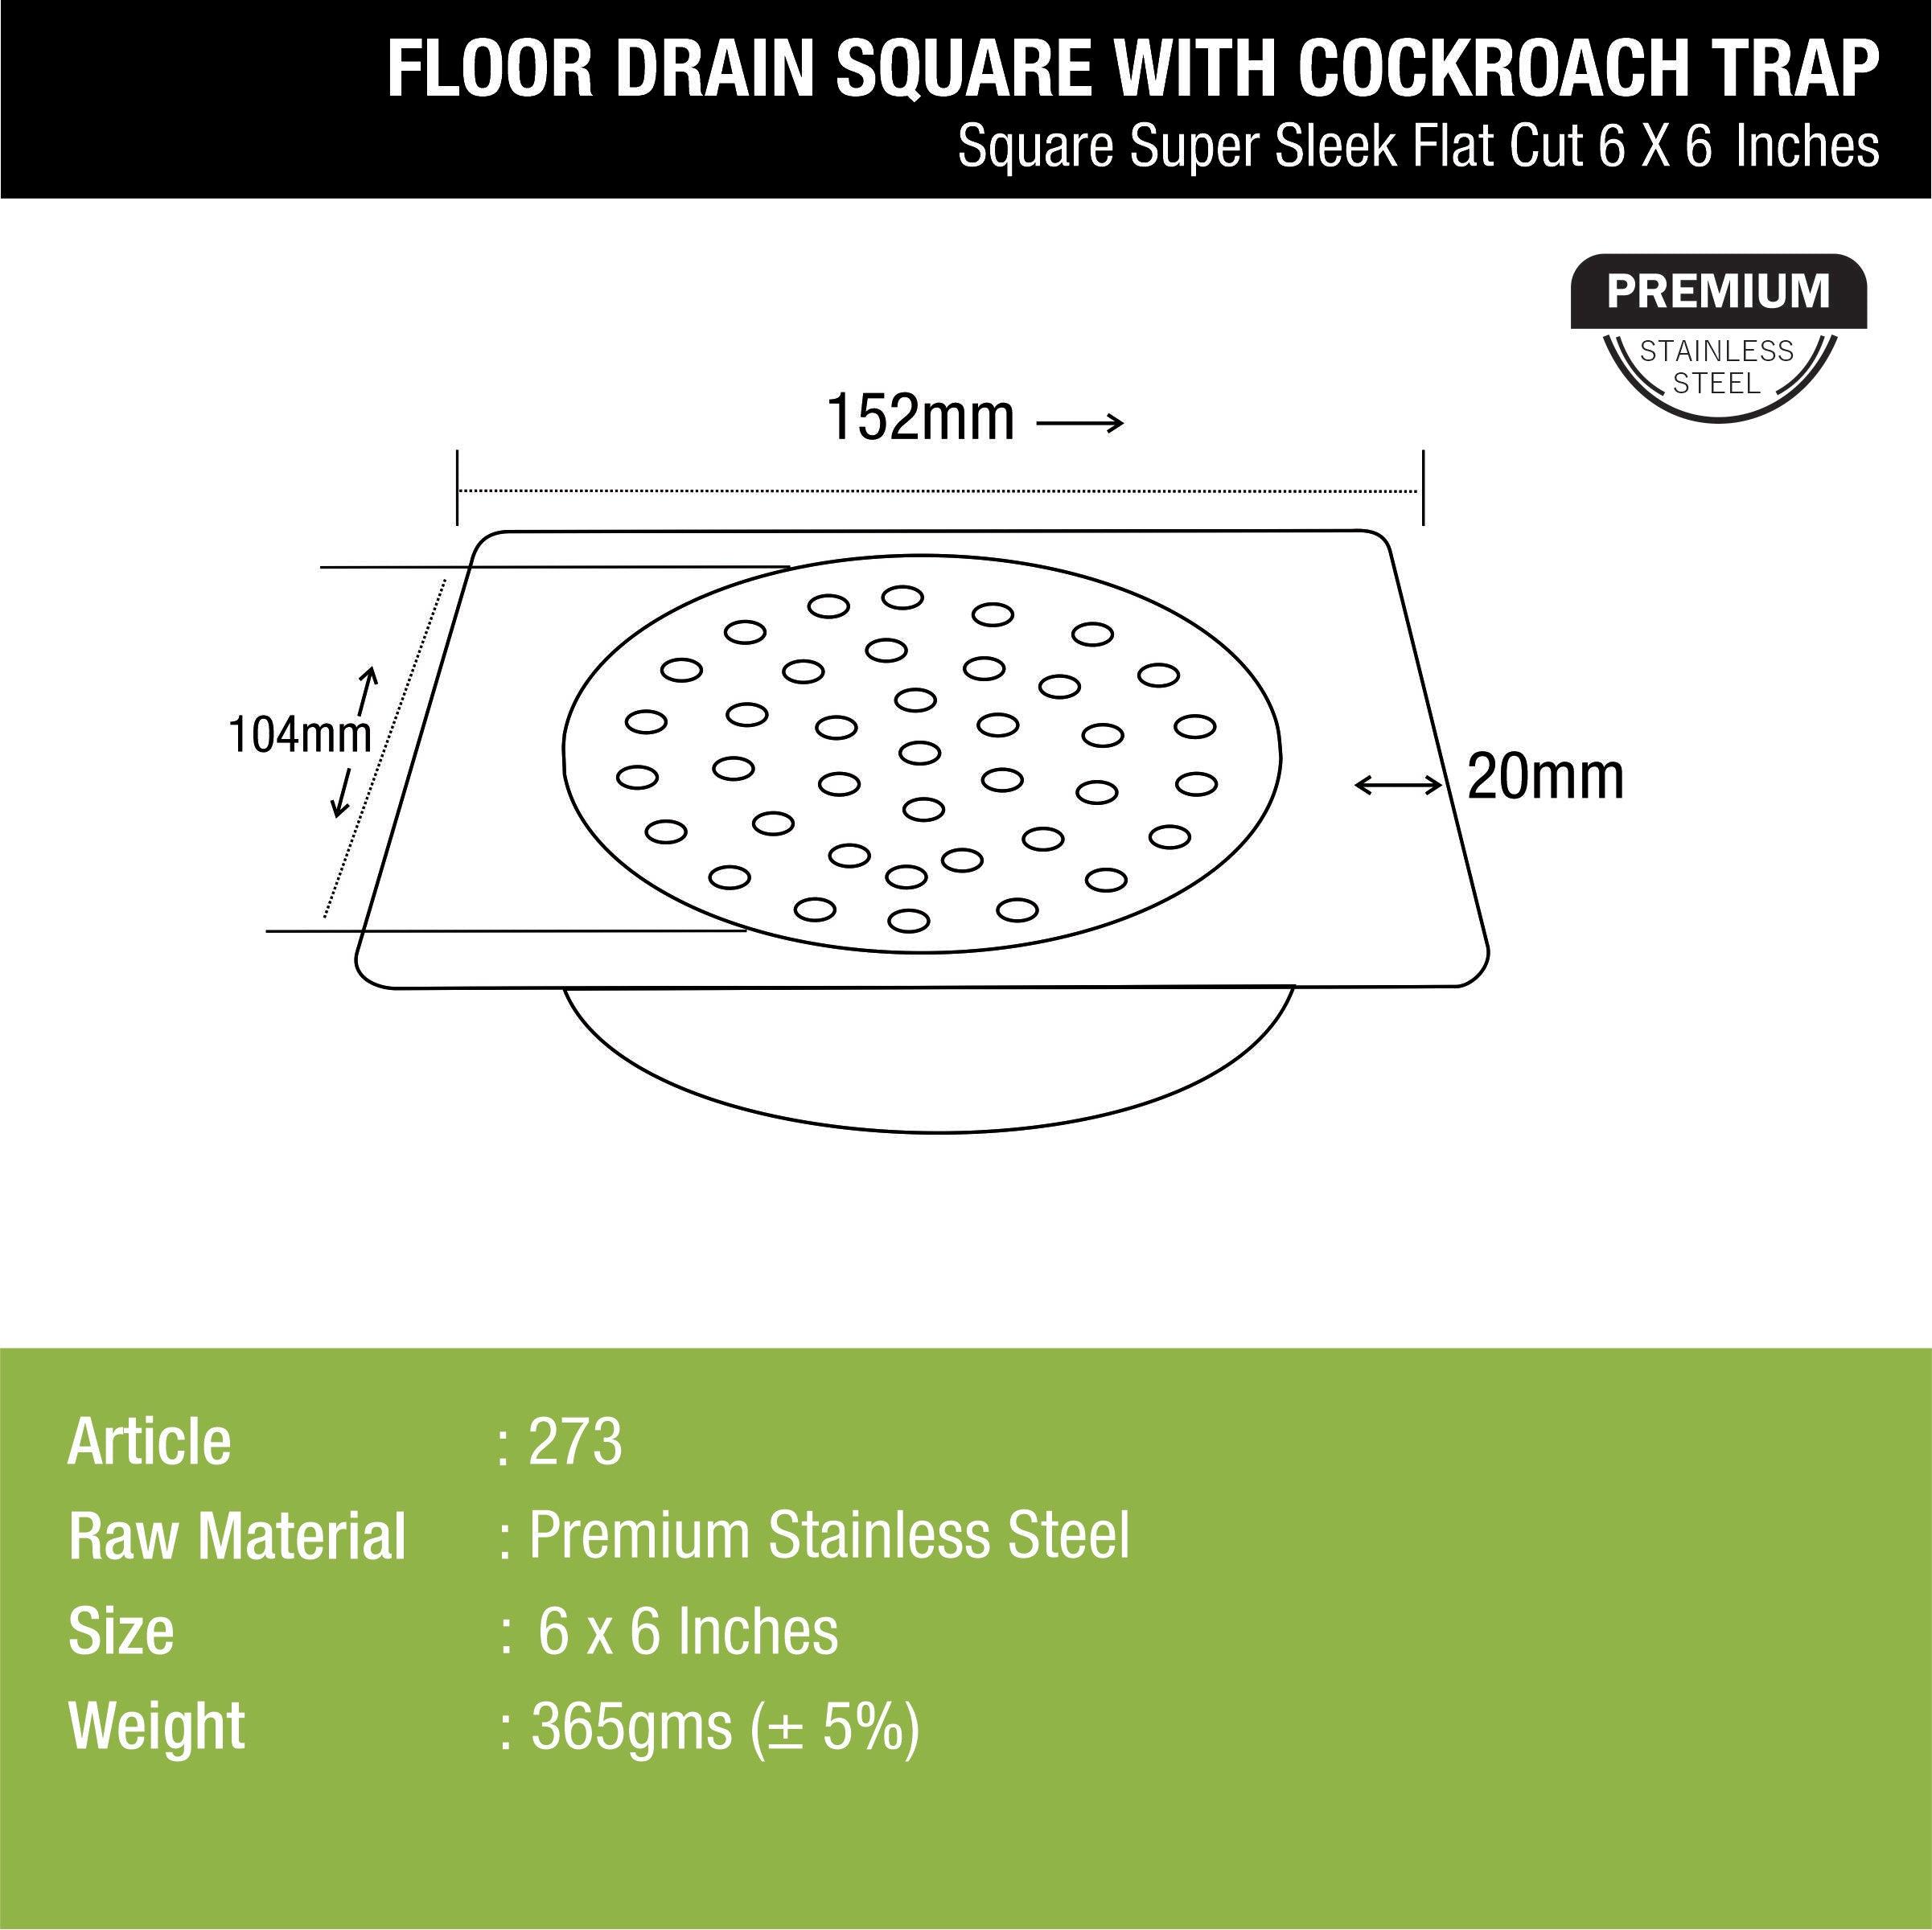 Super Sleek Square Flat Cut Floor Drain (6 x 6 Inches) with Cockroach Trap - LIPKA - Lipka Home